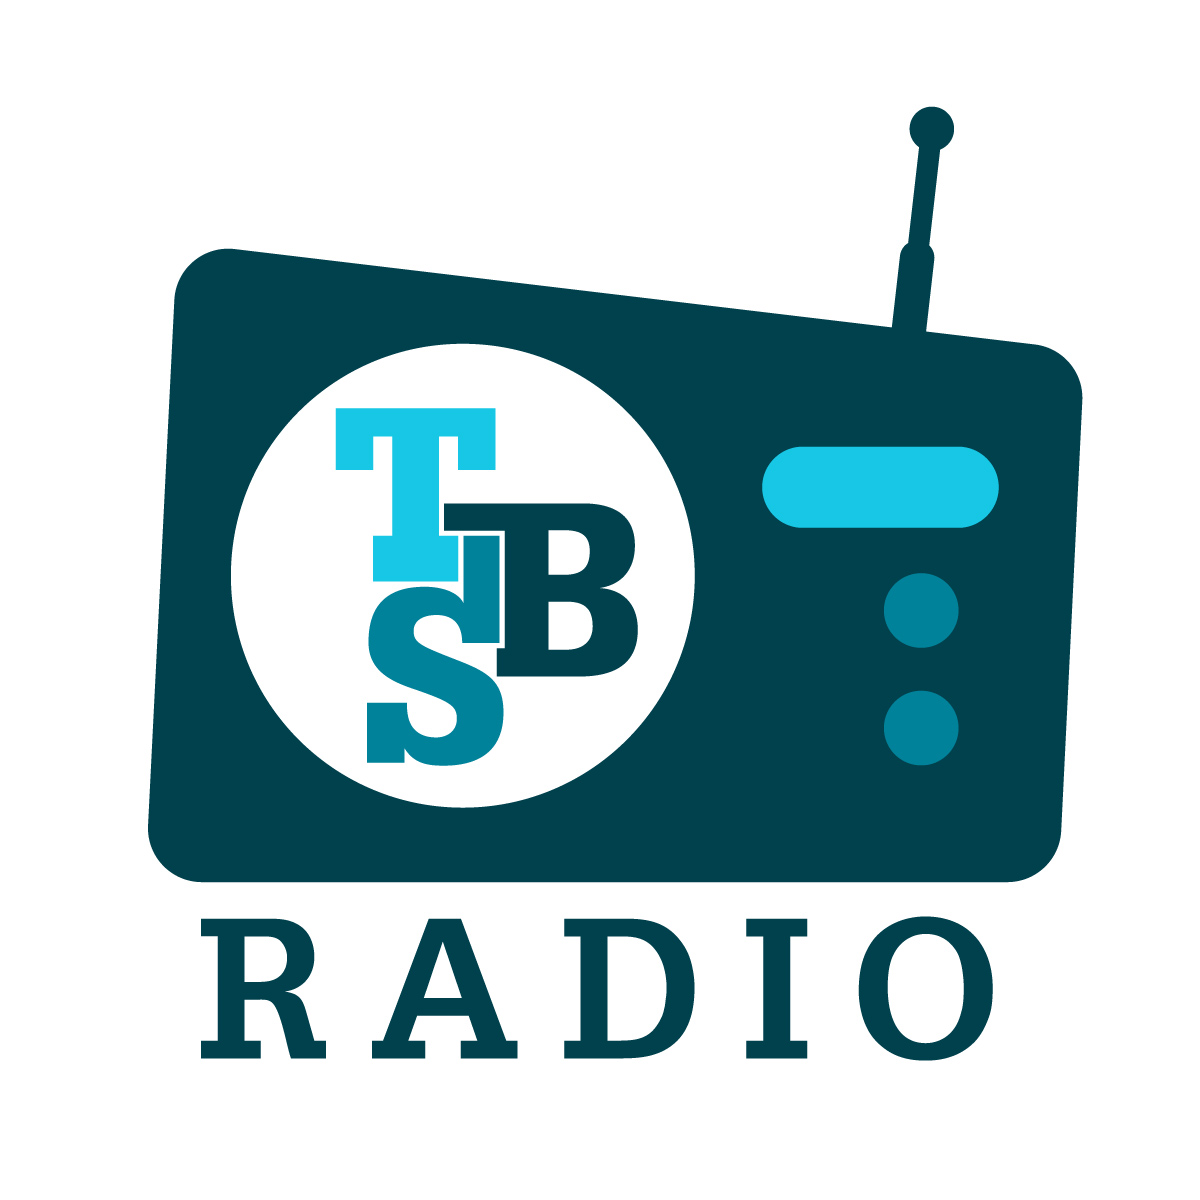 Cisco TBS Radio